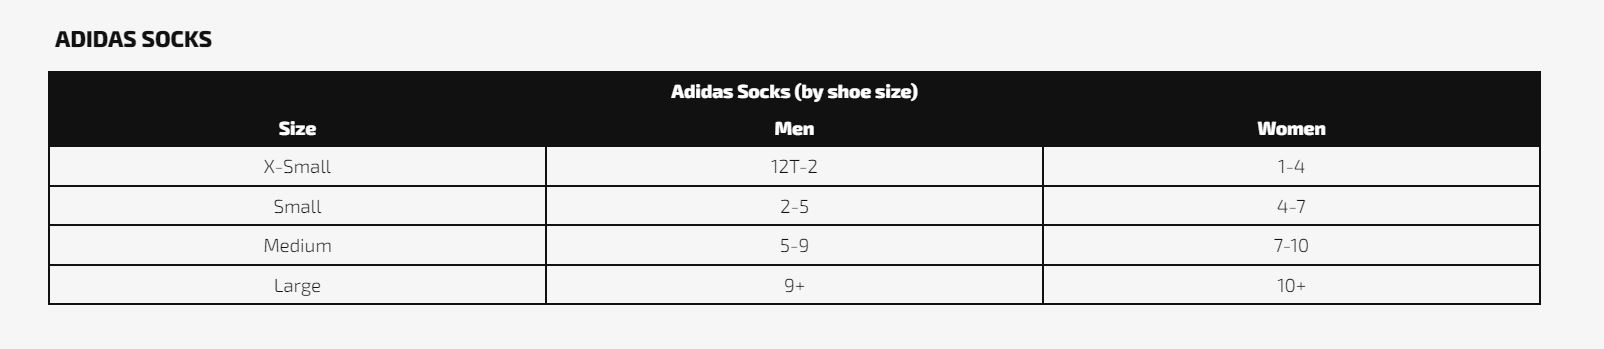 adidas socks sizing guide